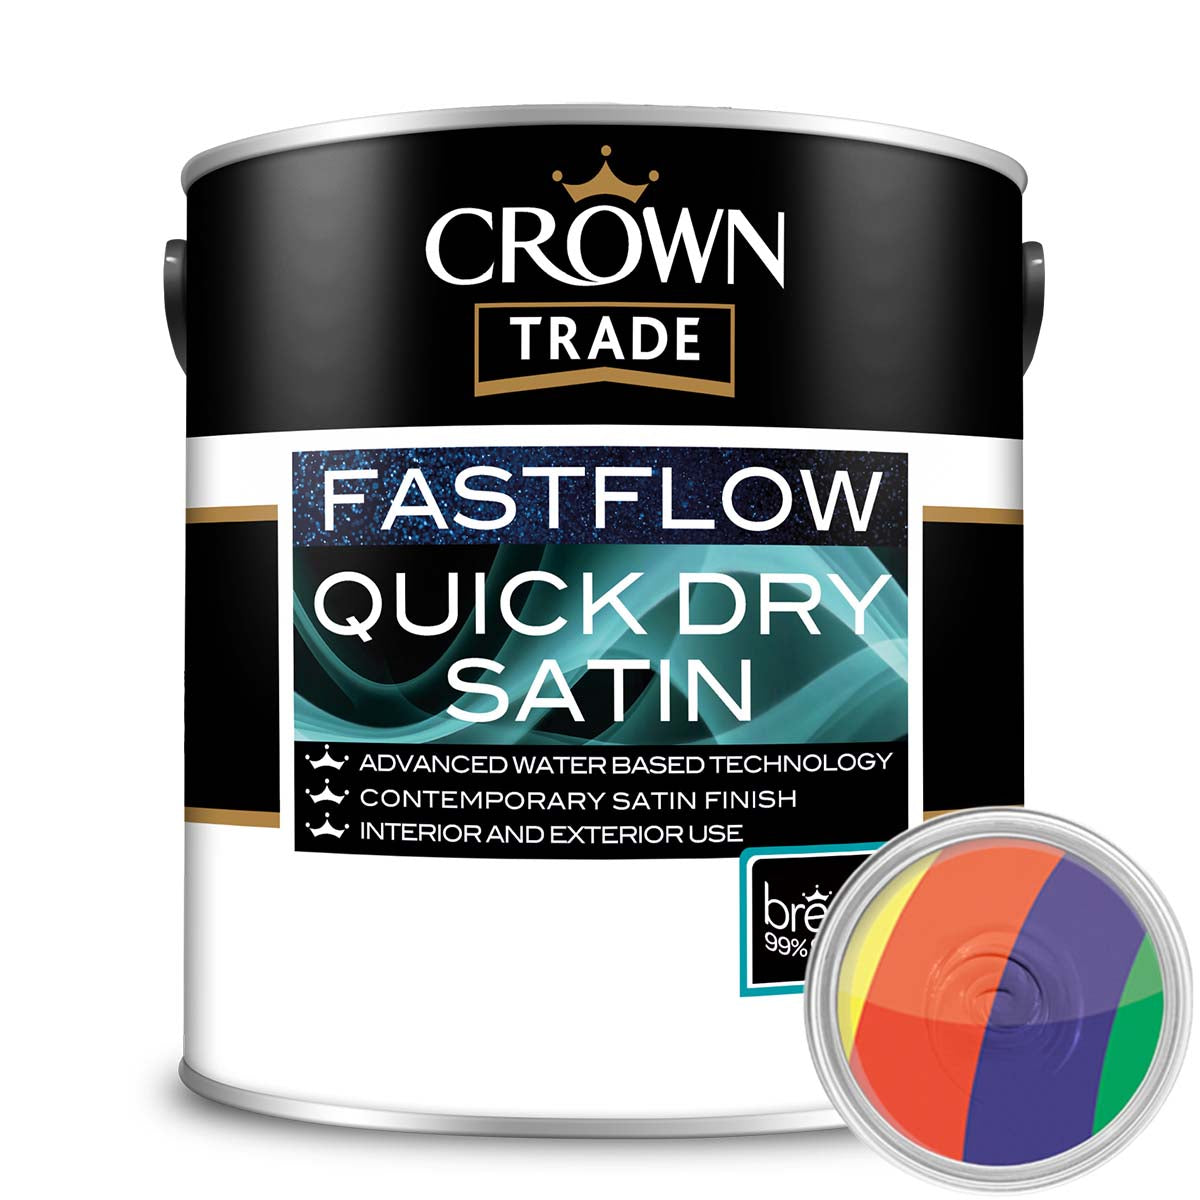 Crown Trade Fastflow Quick Dry Satin